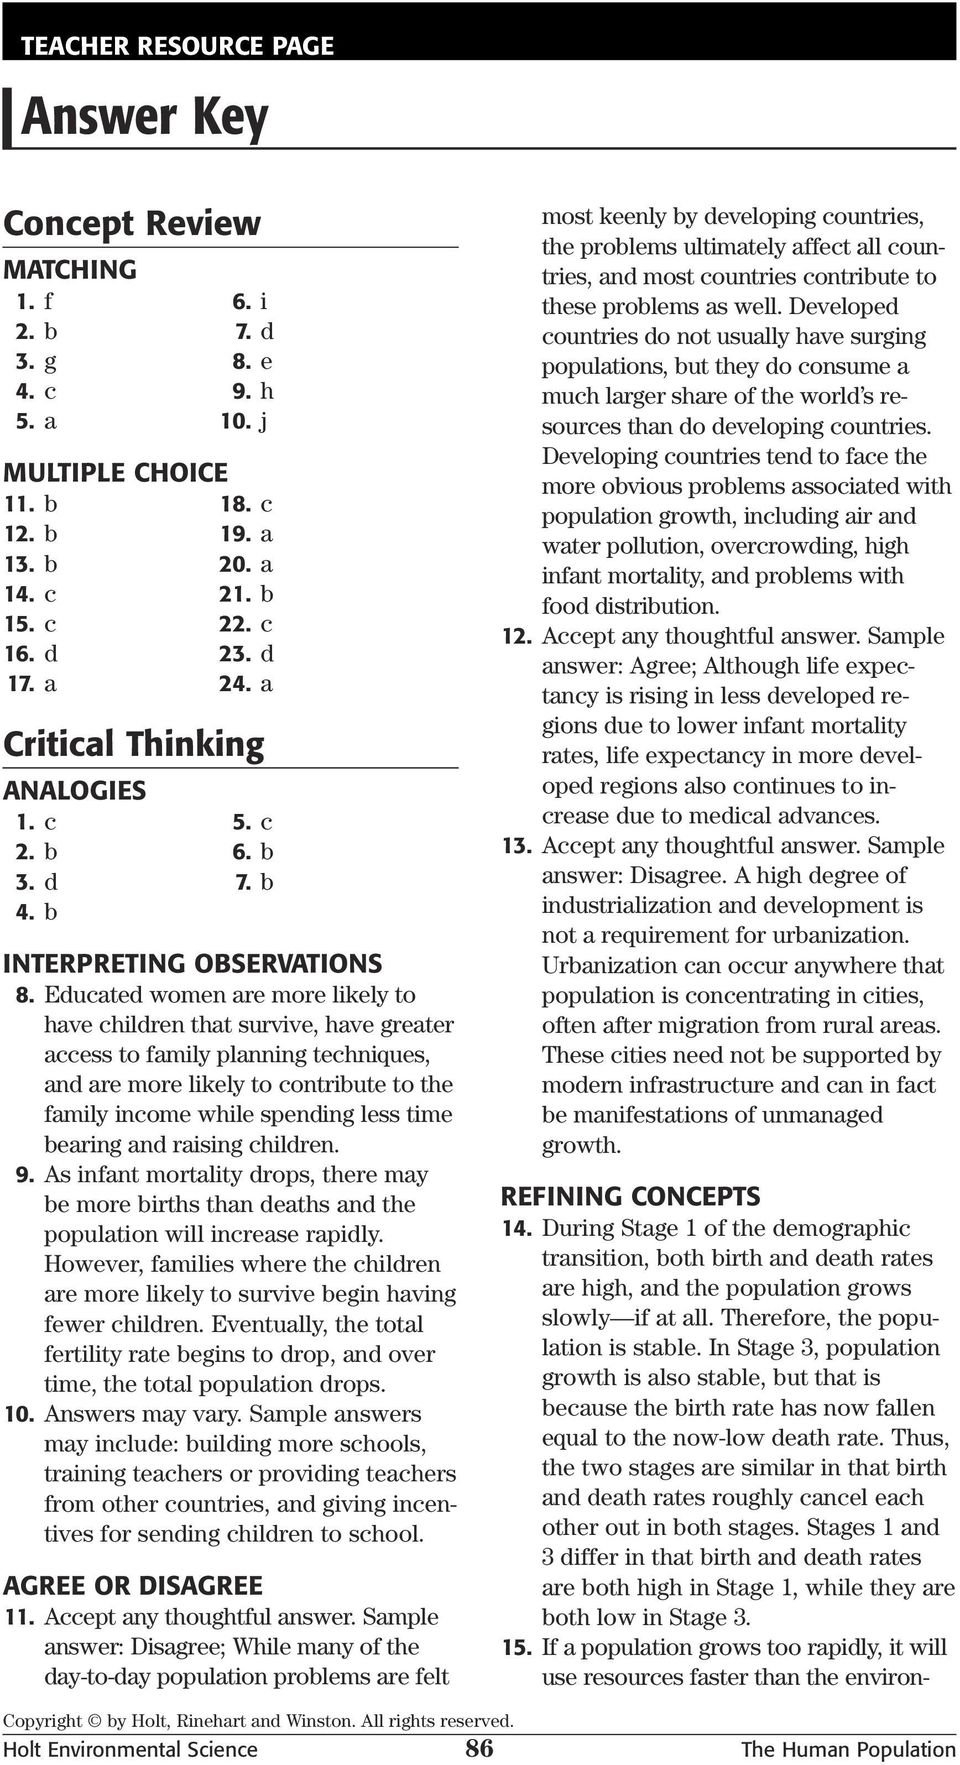 Critical Thinking Analogies Skills Worksheet  Pdf Regarding Skills Worksheet Critical Thinking Analogies Environmental Science